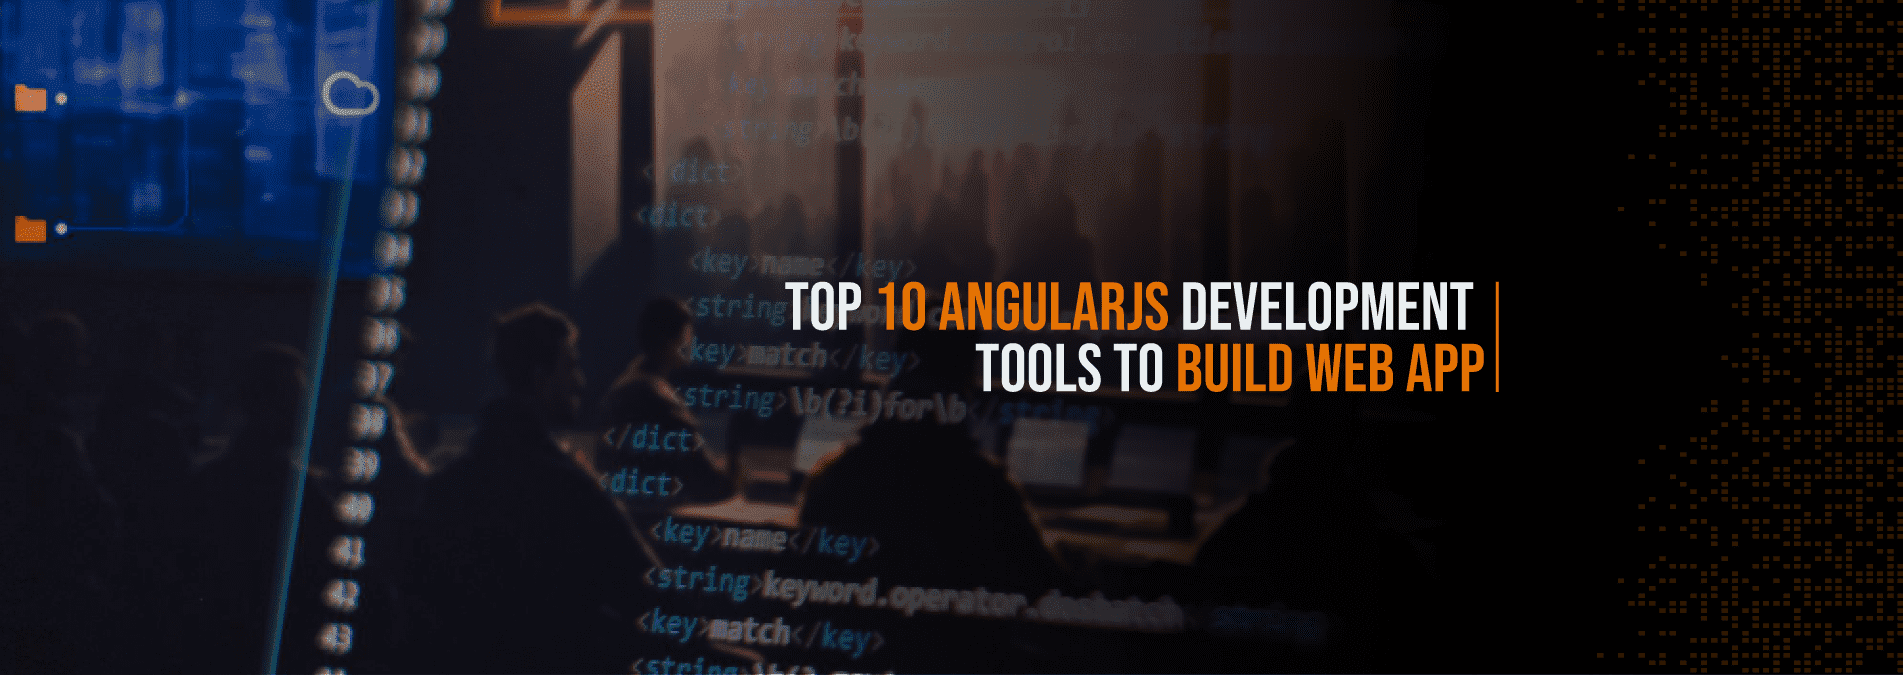 Top-10-AngularJS-Development-Tools-to-Build-Web-App - Internet Soft